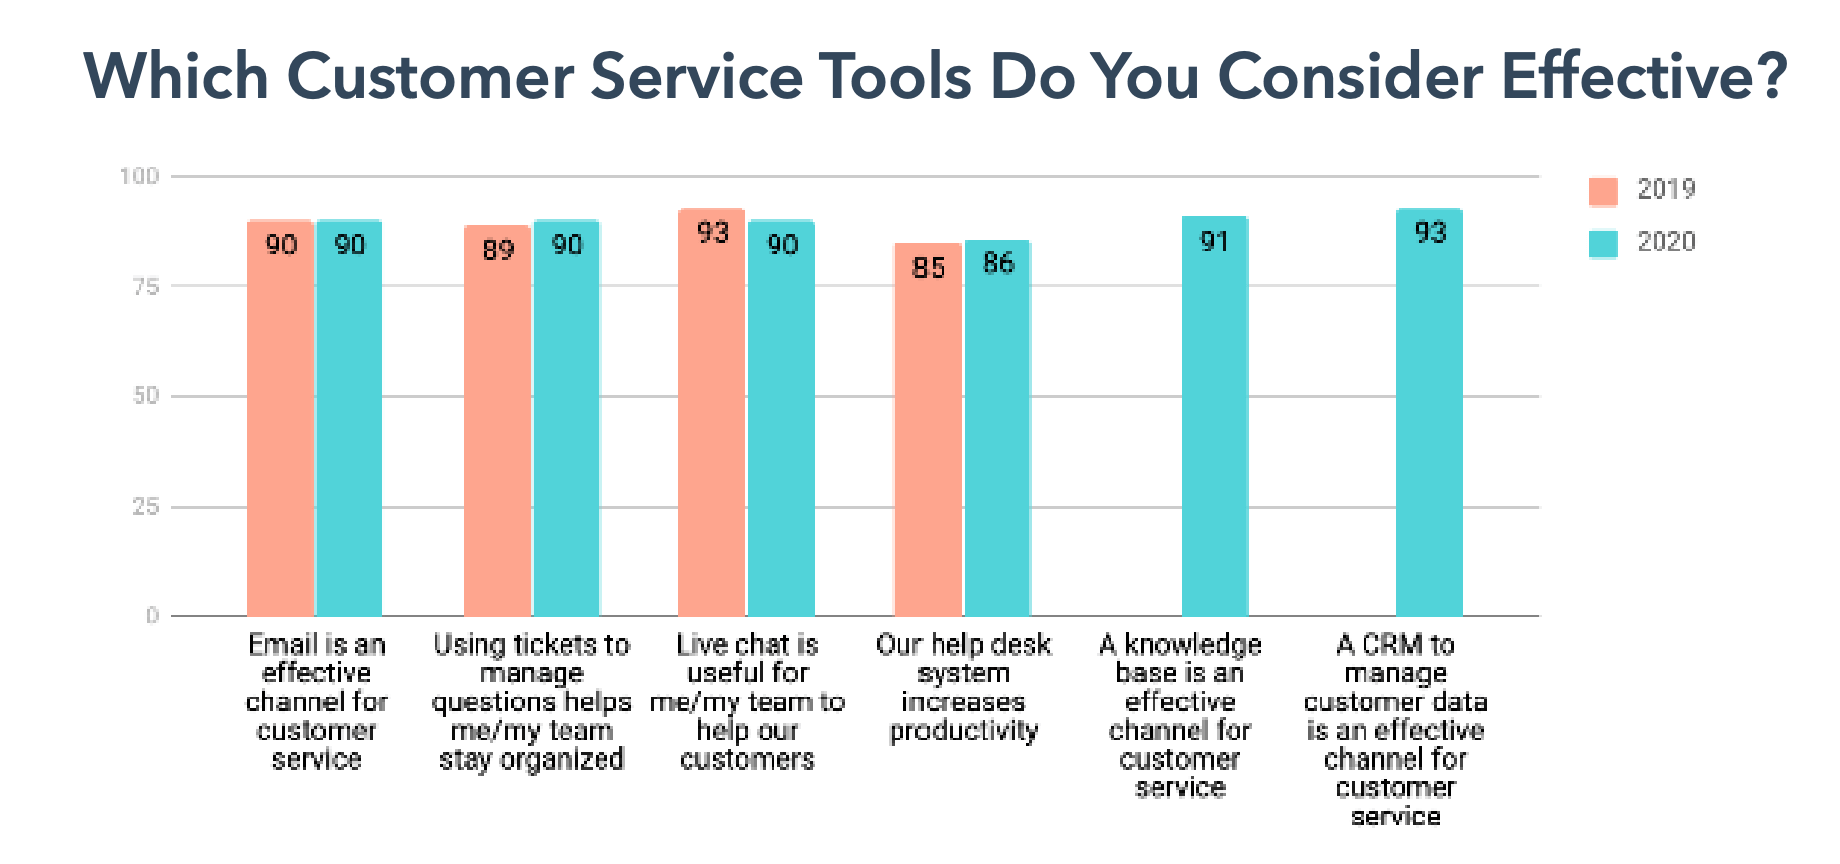 Digital customer service tools help your agents work smarter